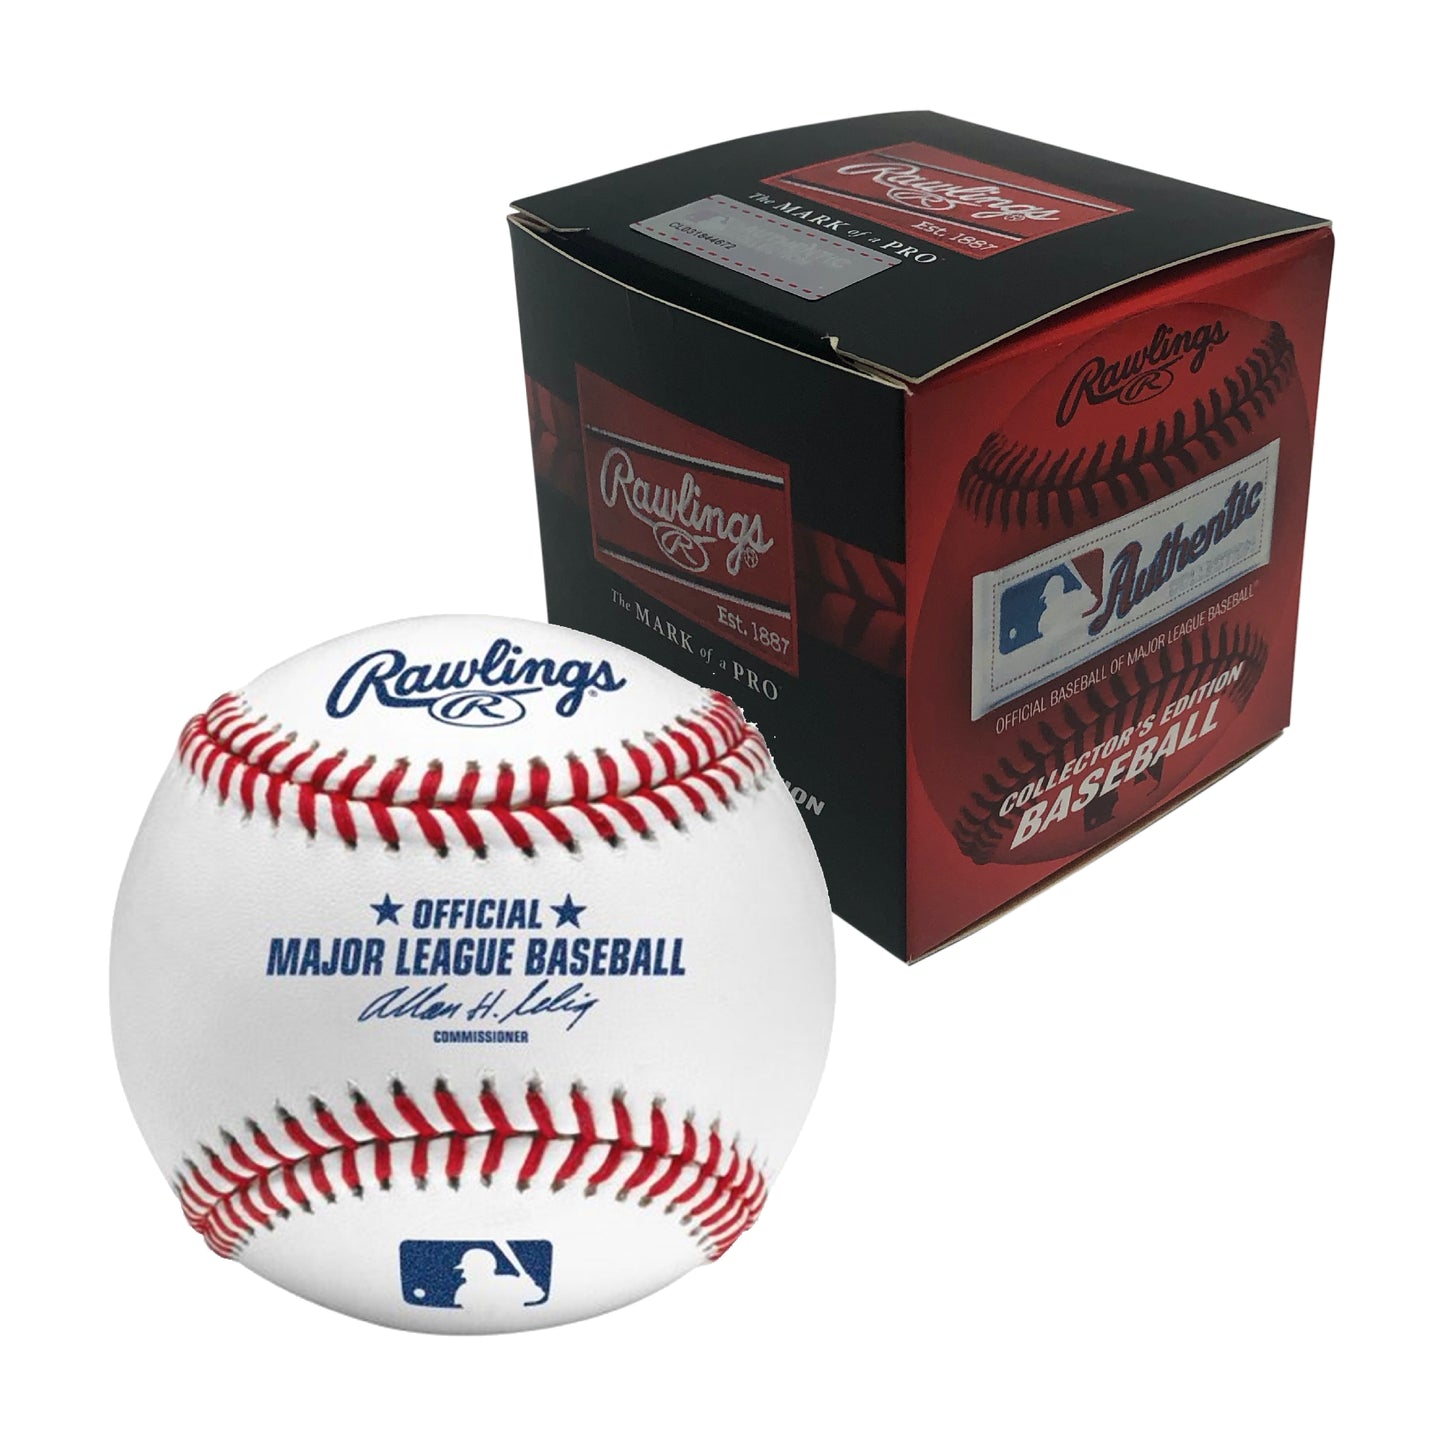 ROMLB Rawlings Official MLB Leather Game Baseball Robert Manfred - 24